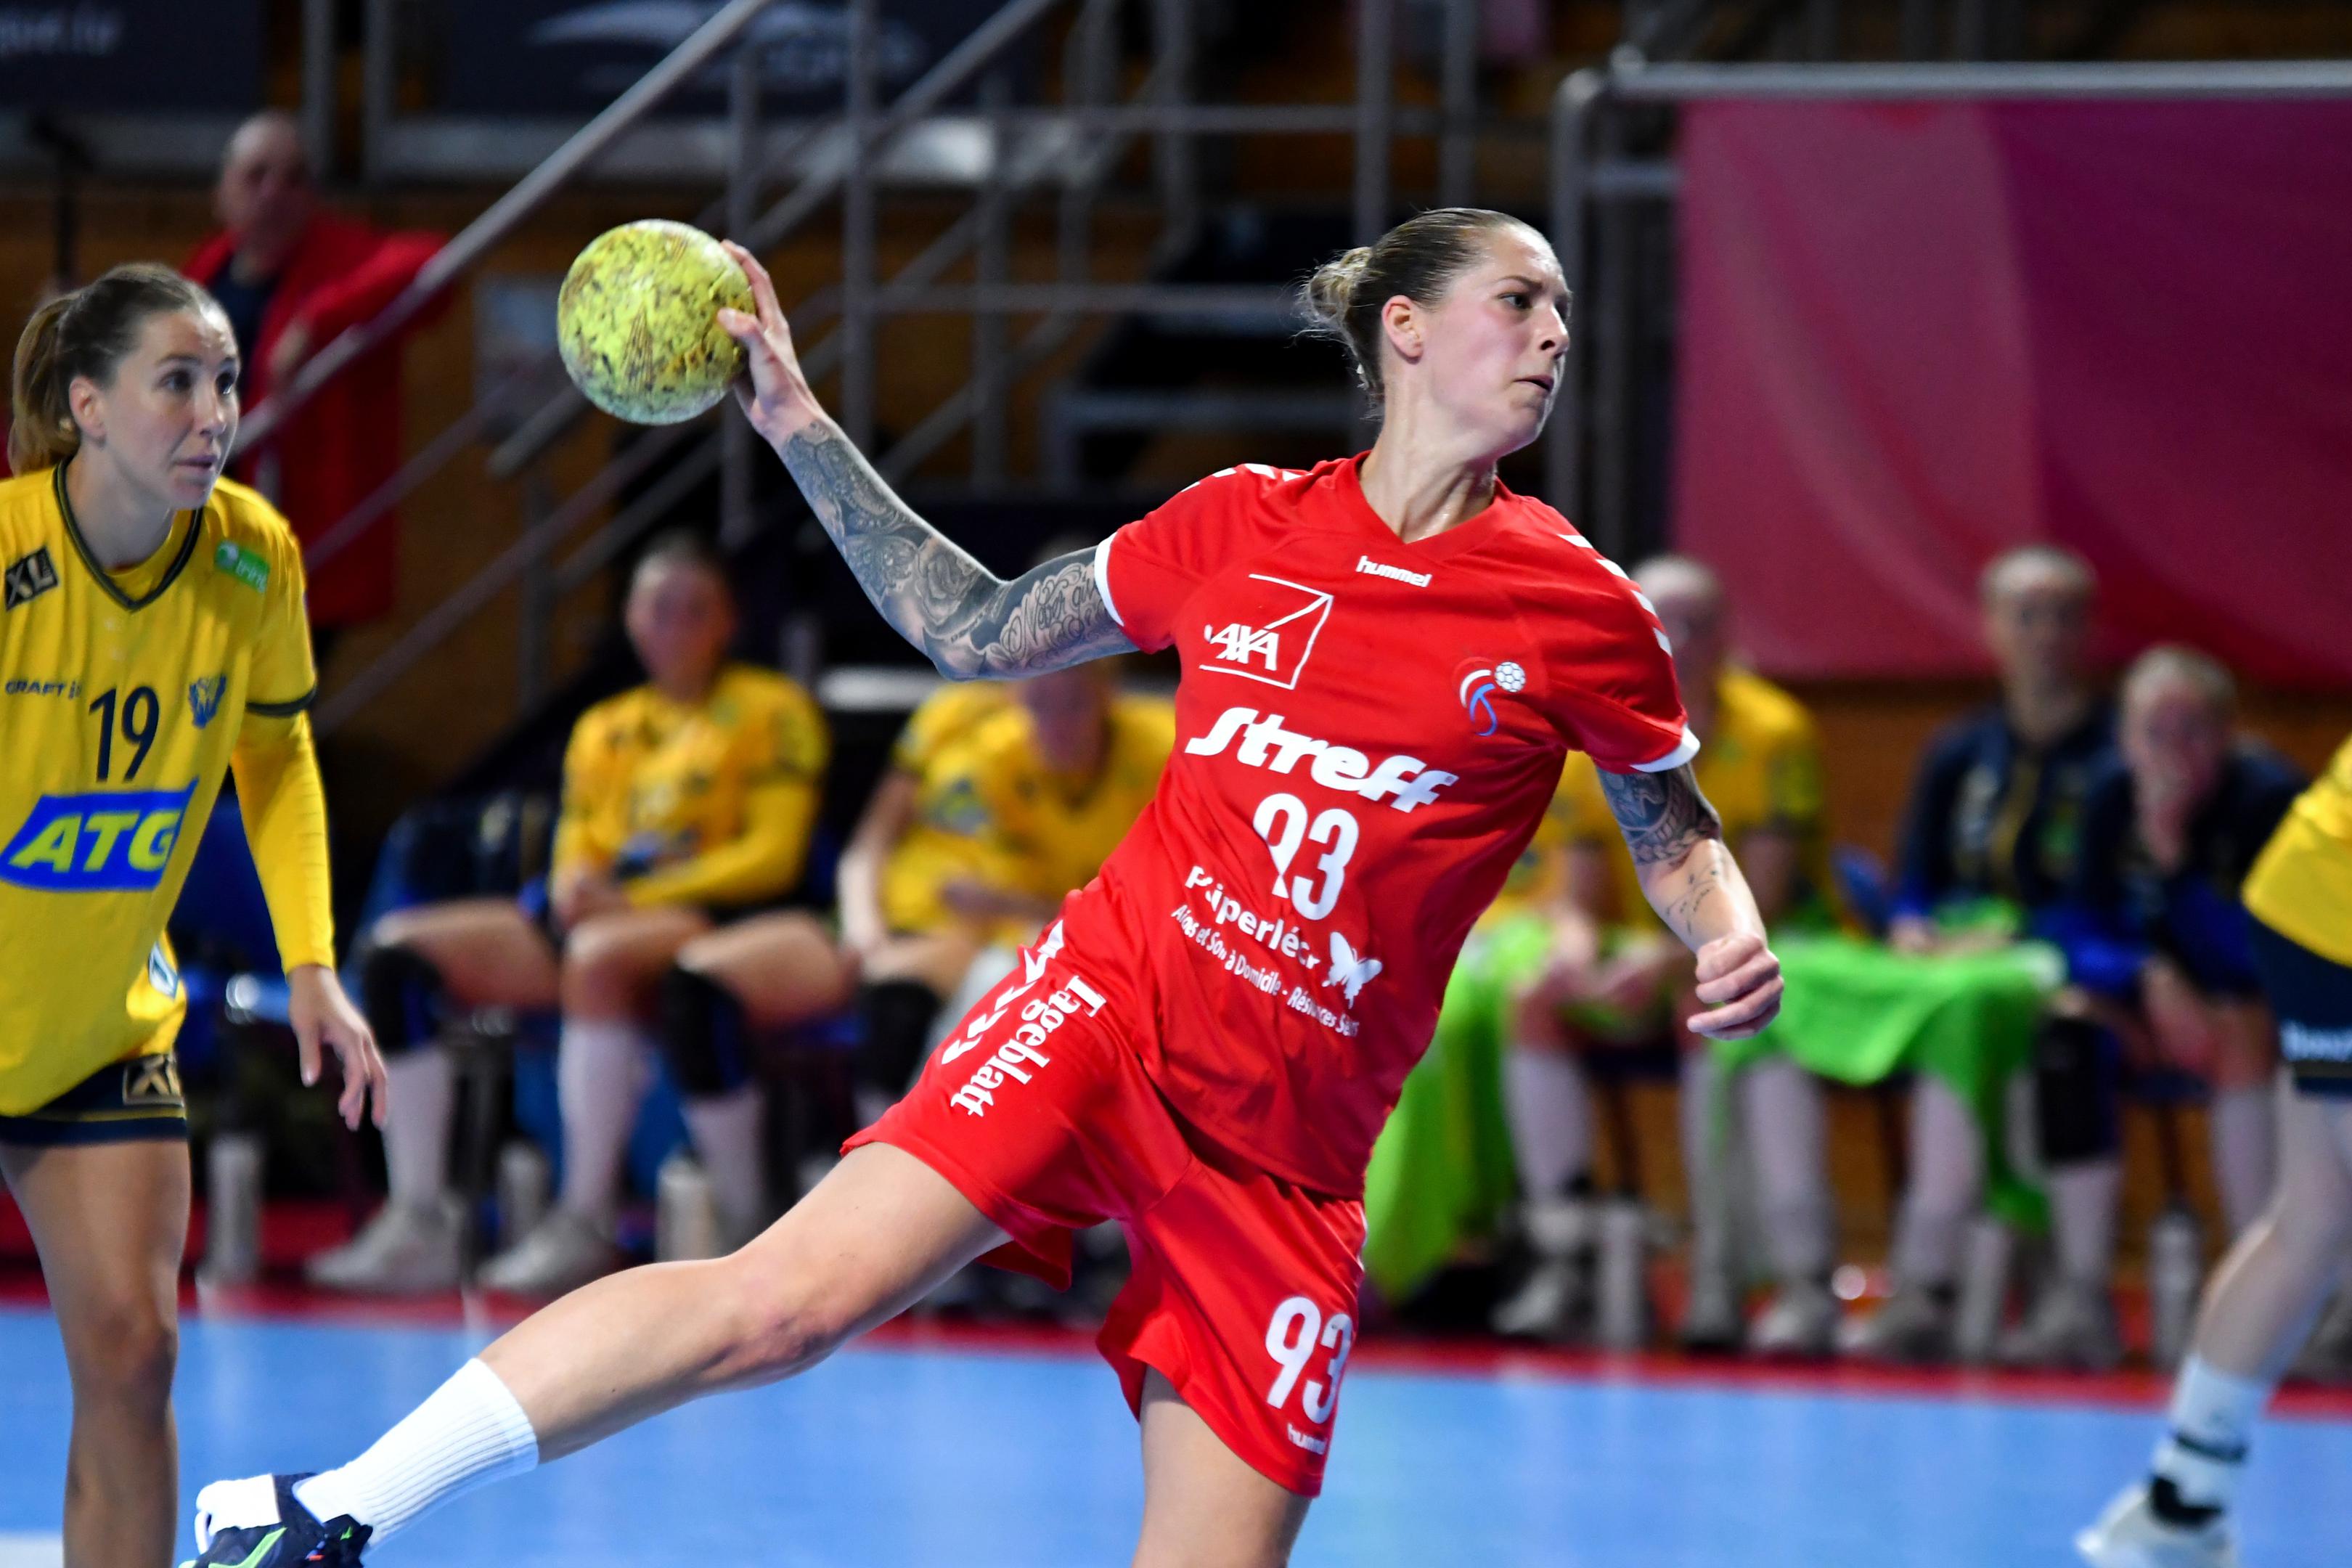 Finale coupe de Luxembourg 2016 de Handball - Coque tv 